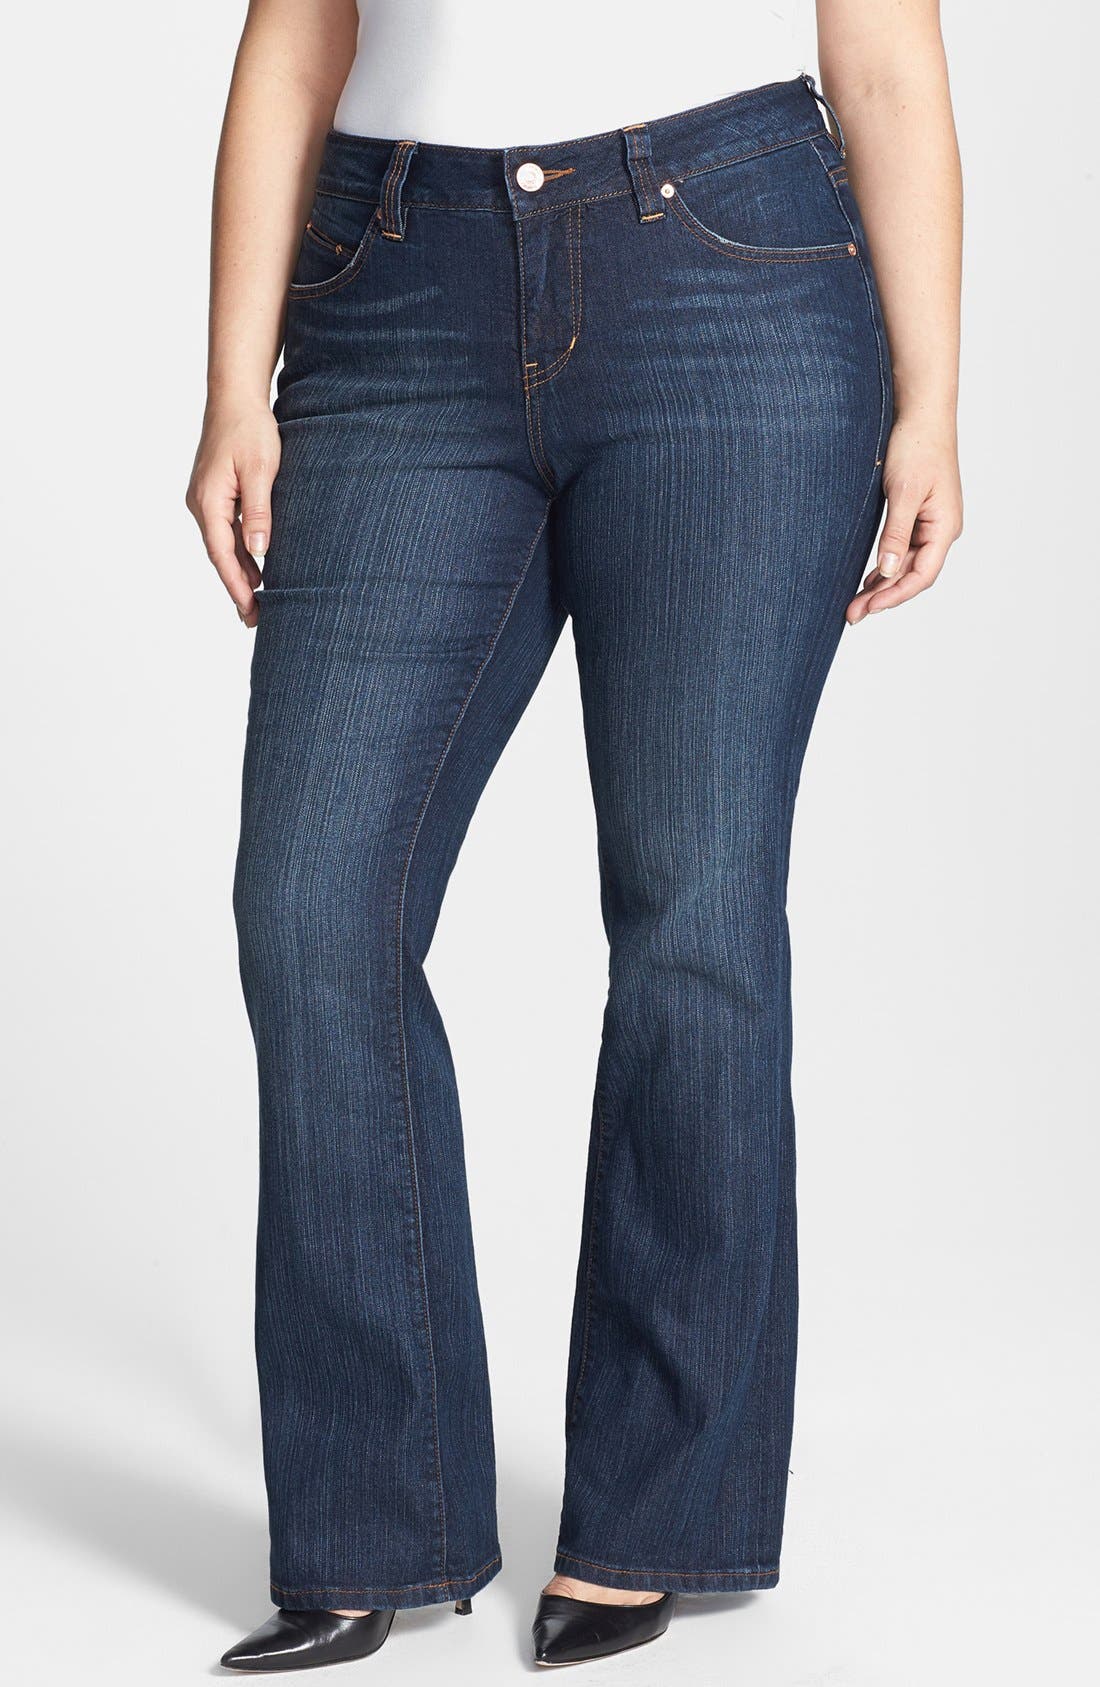 narrow bootcut jeans